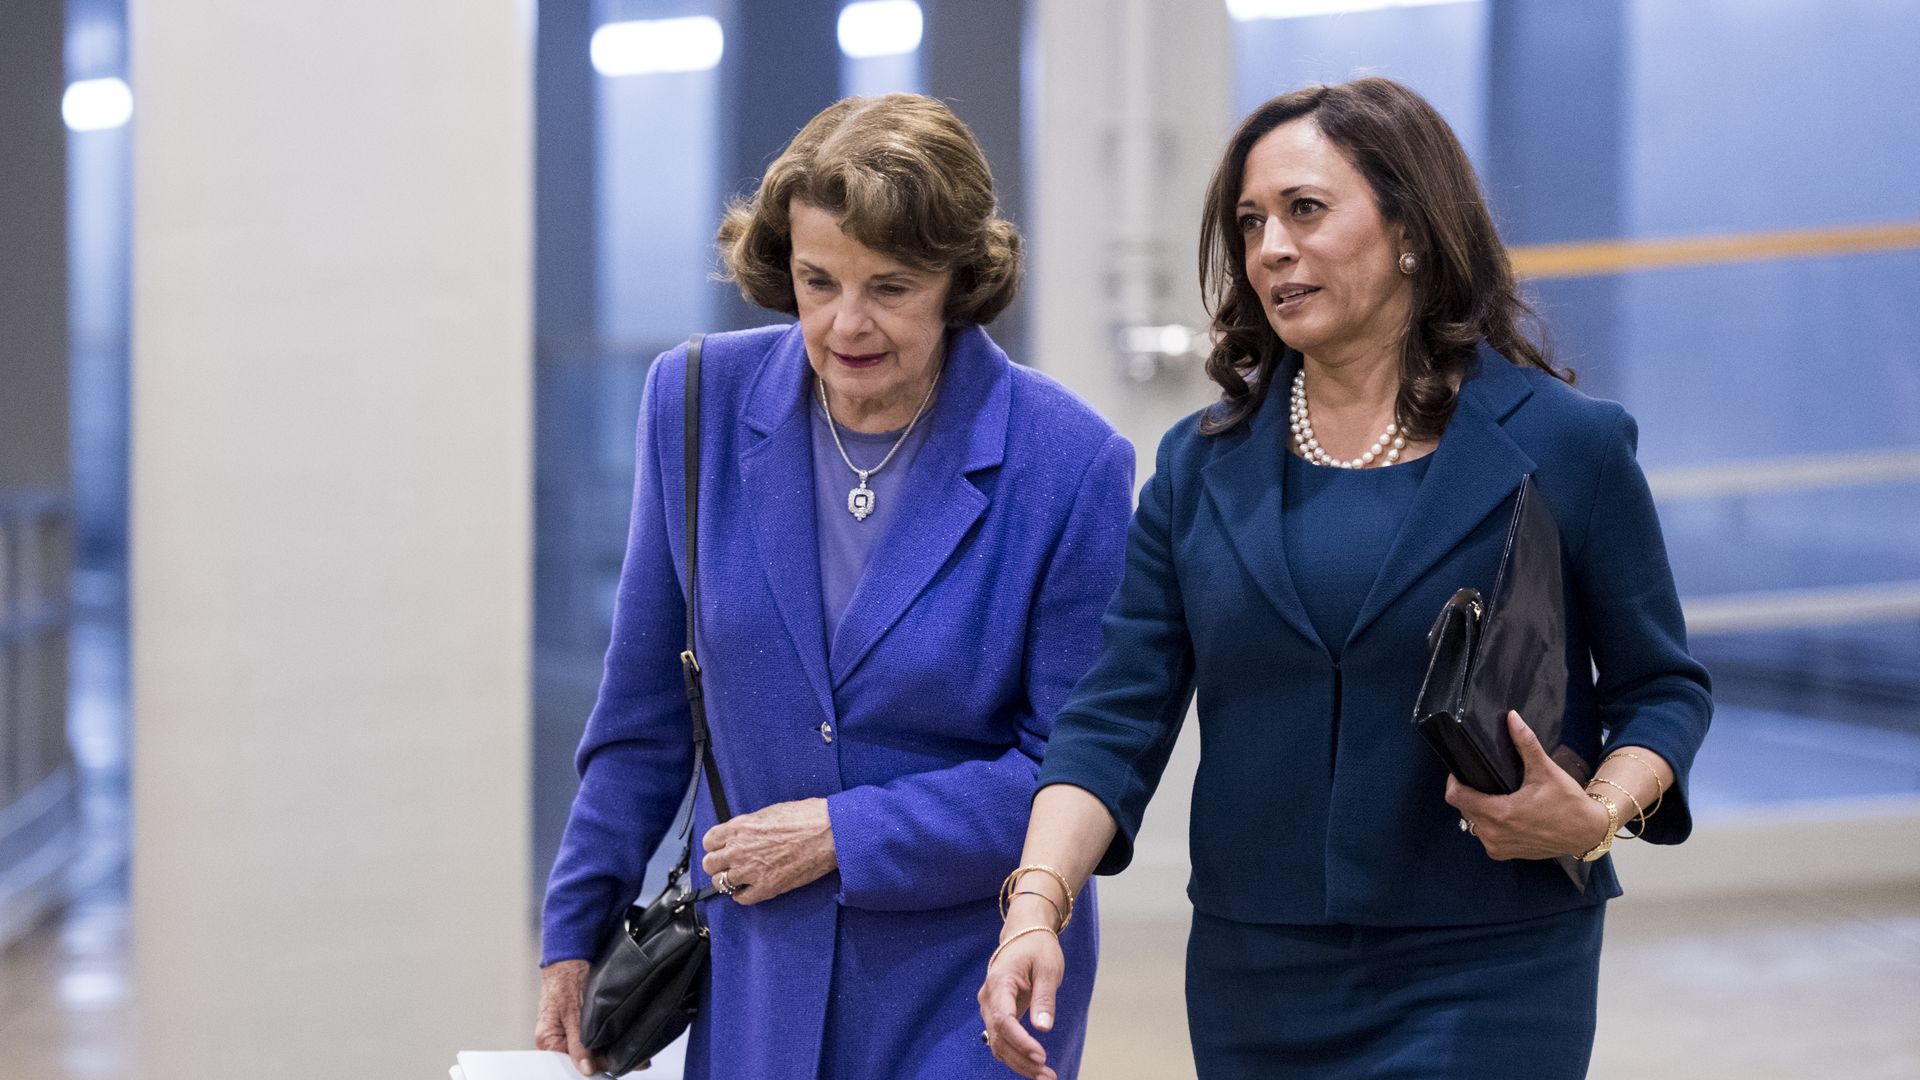 Senators Dianne Feinstein and Kamala Harris walking side by side in the Capitol building 